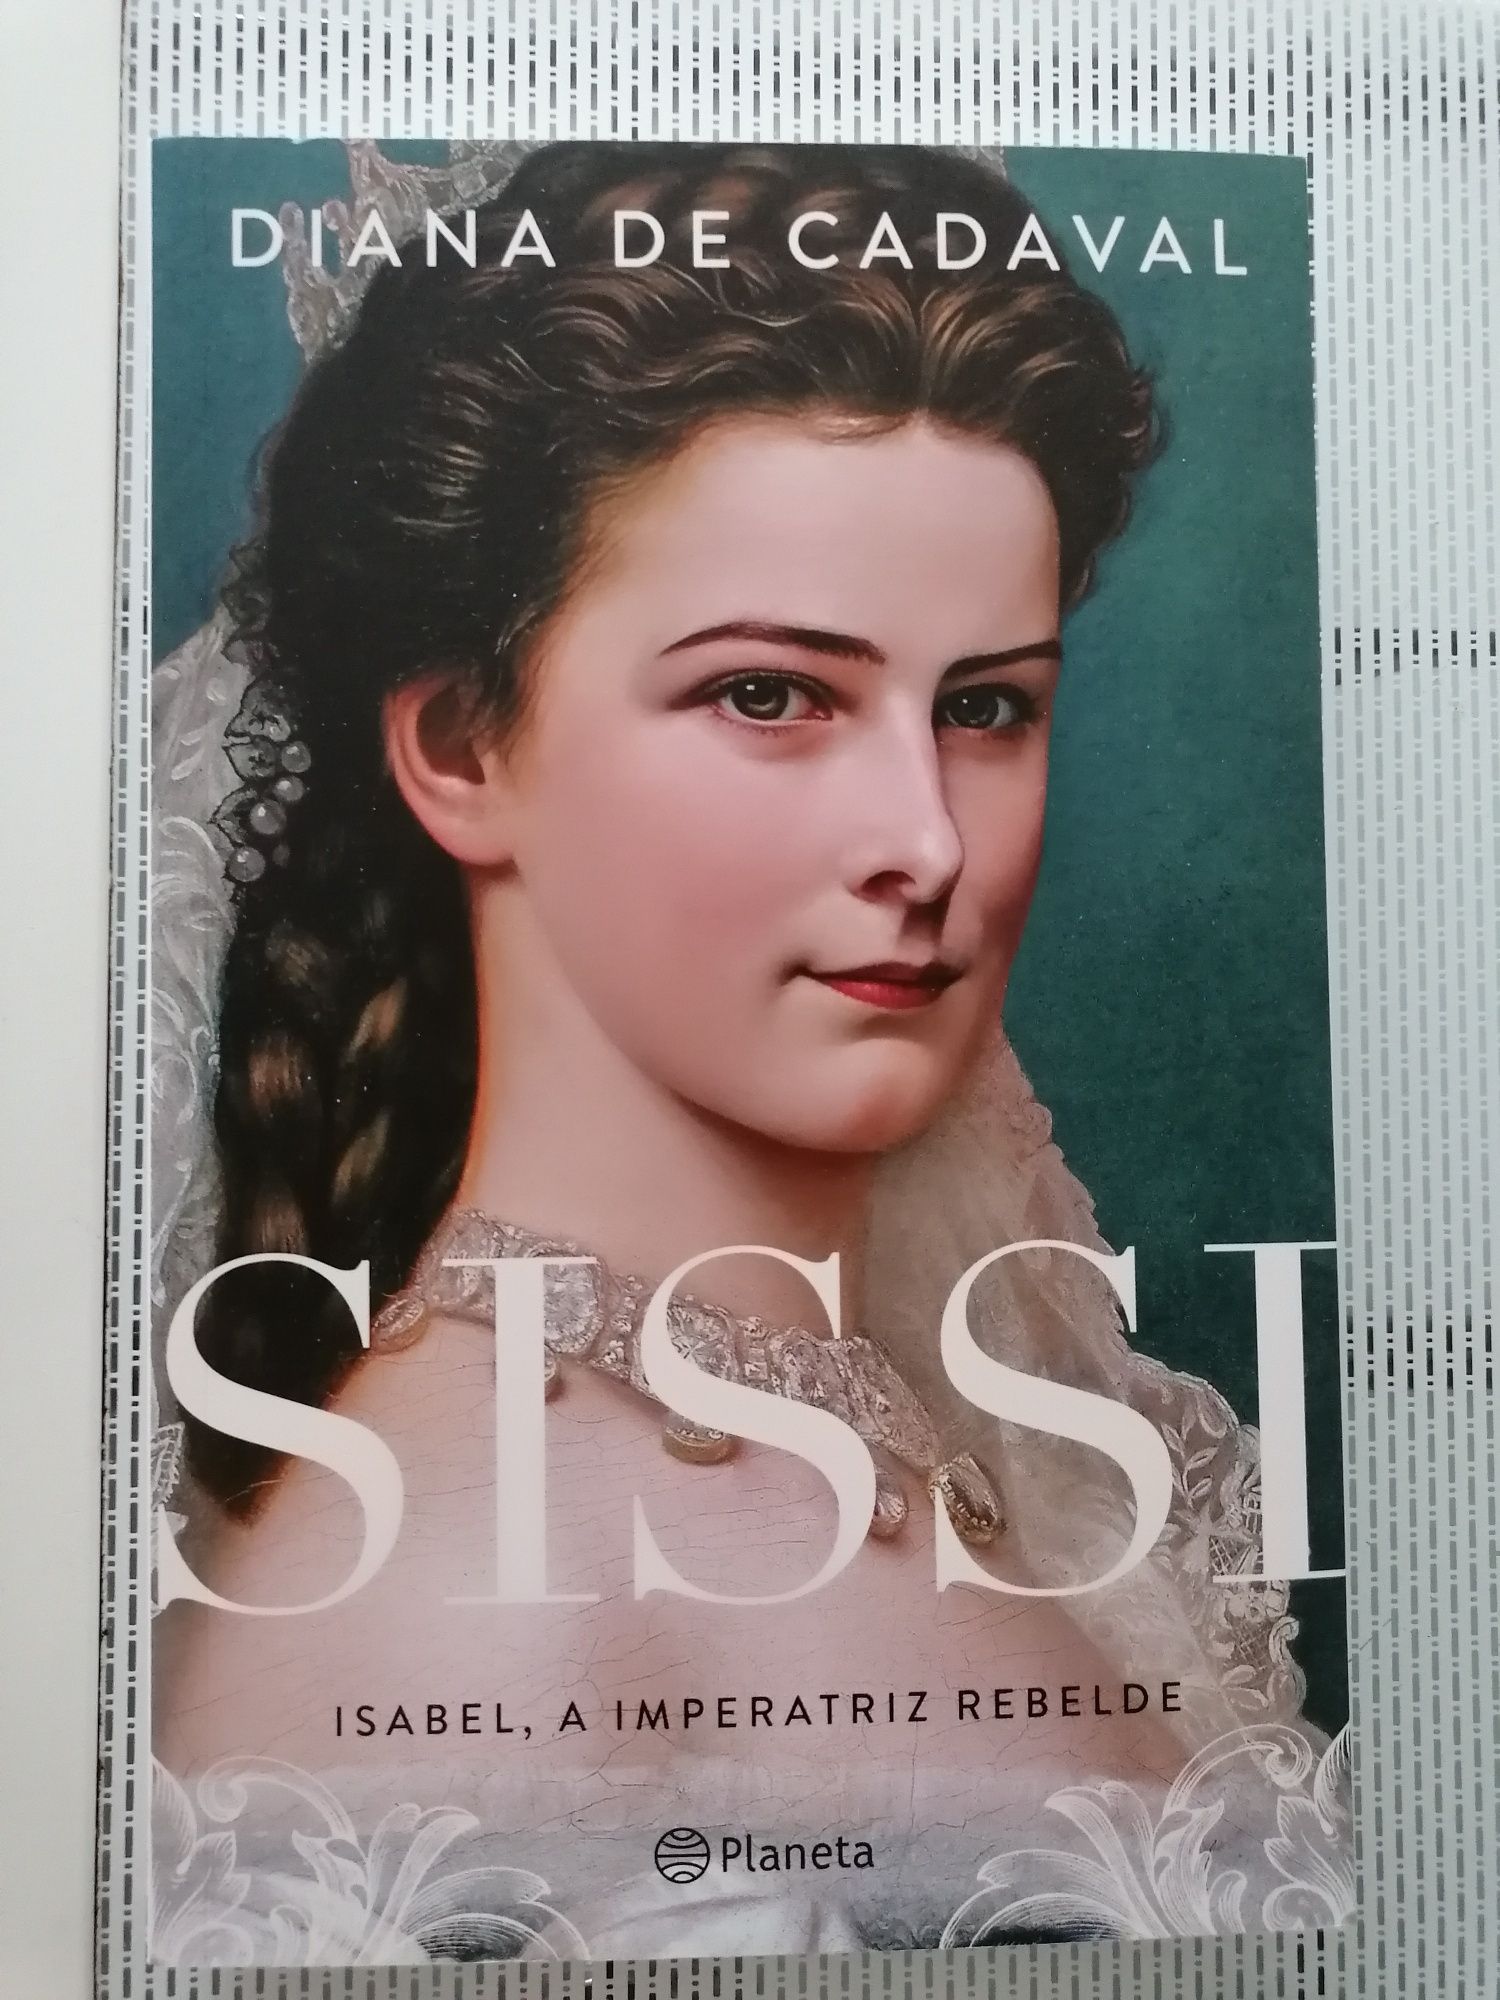 Sissi - Isabel, a Imperatriz Rebelde
de Diana de Cadaval